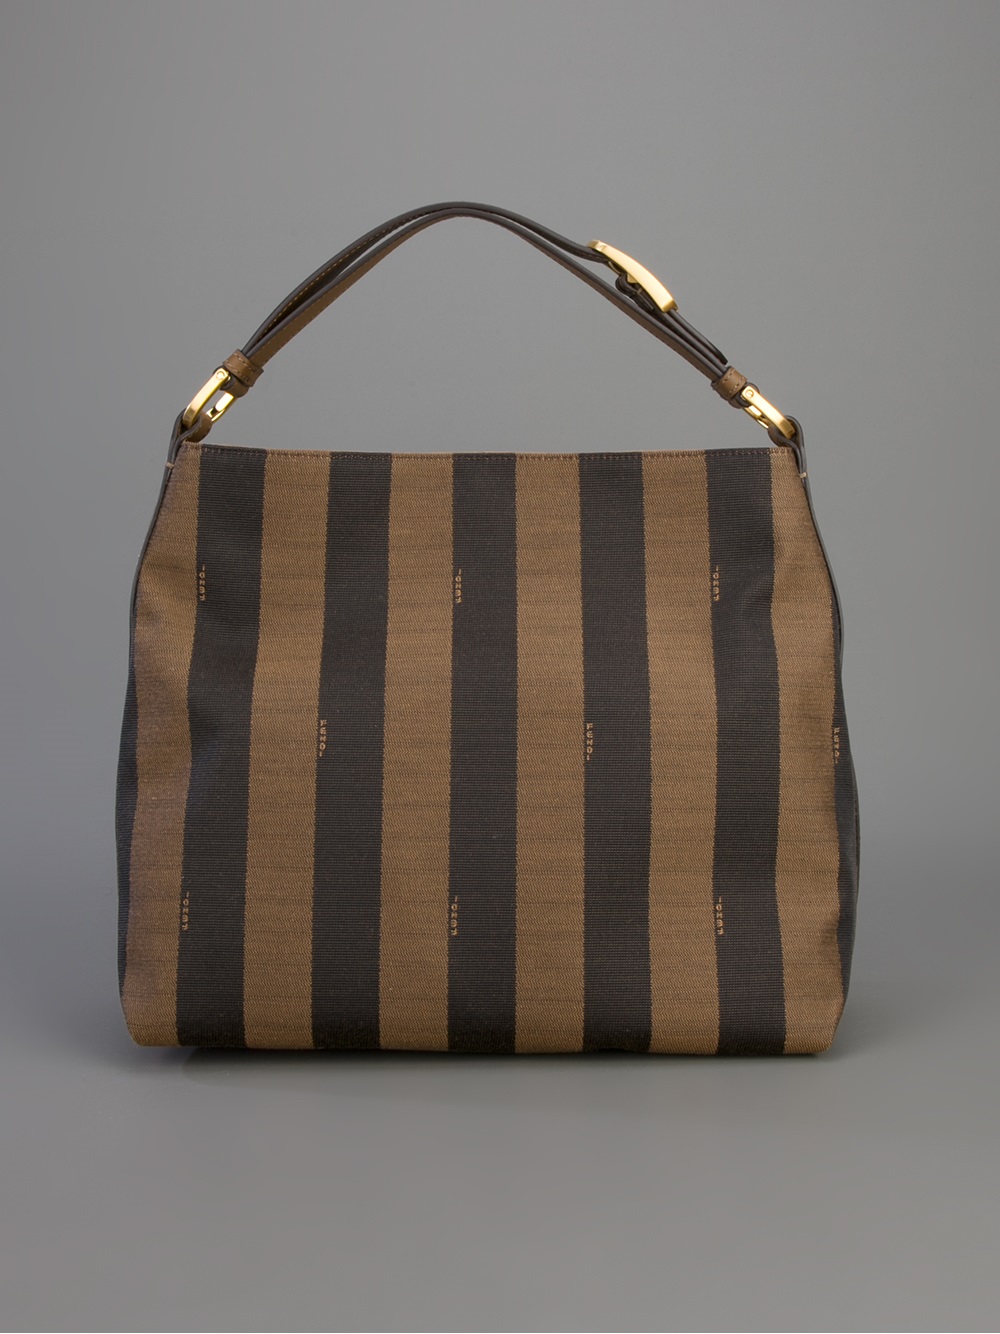 Fendi Pequin Hobo Shoulder Bag in Brown | Lyst